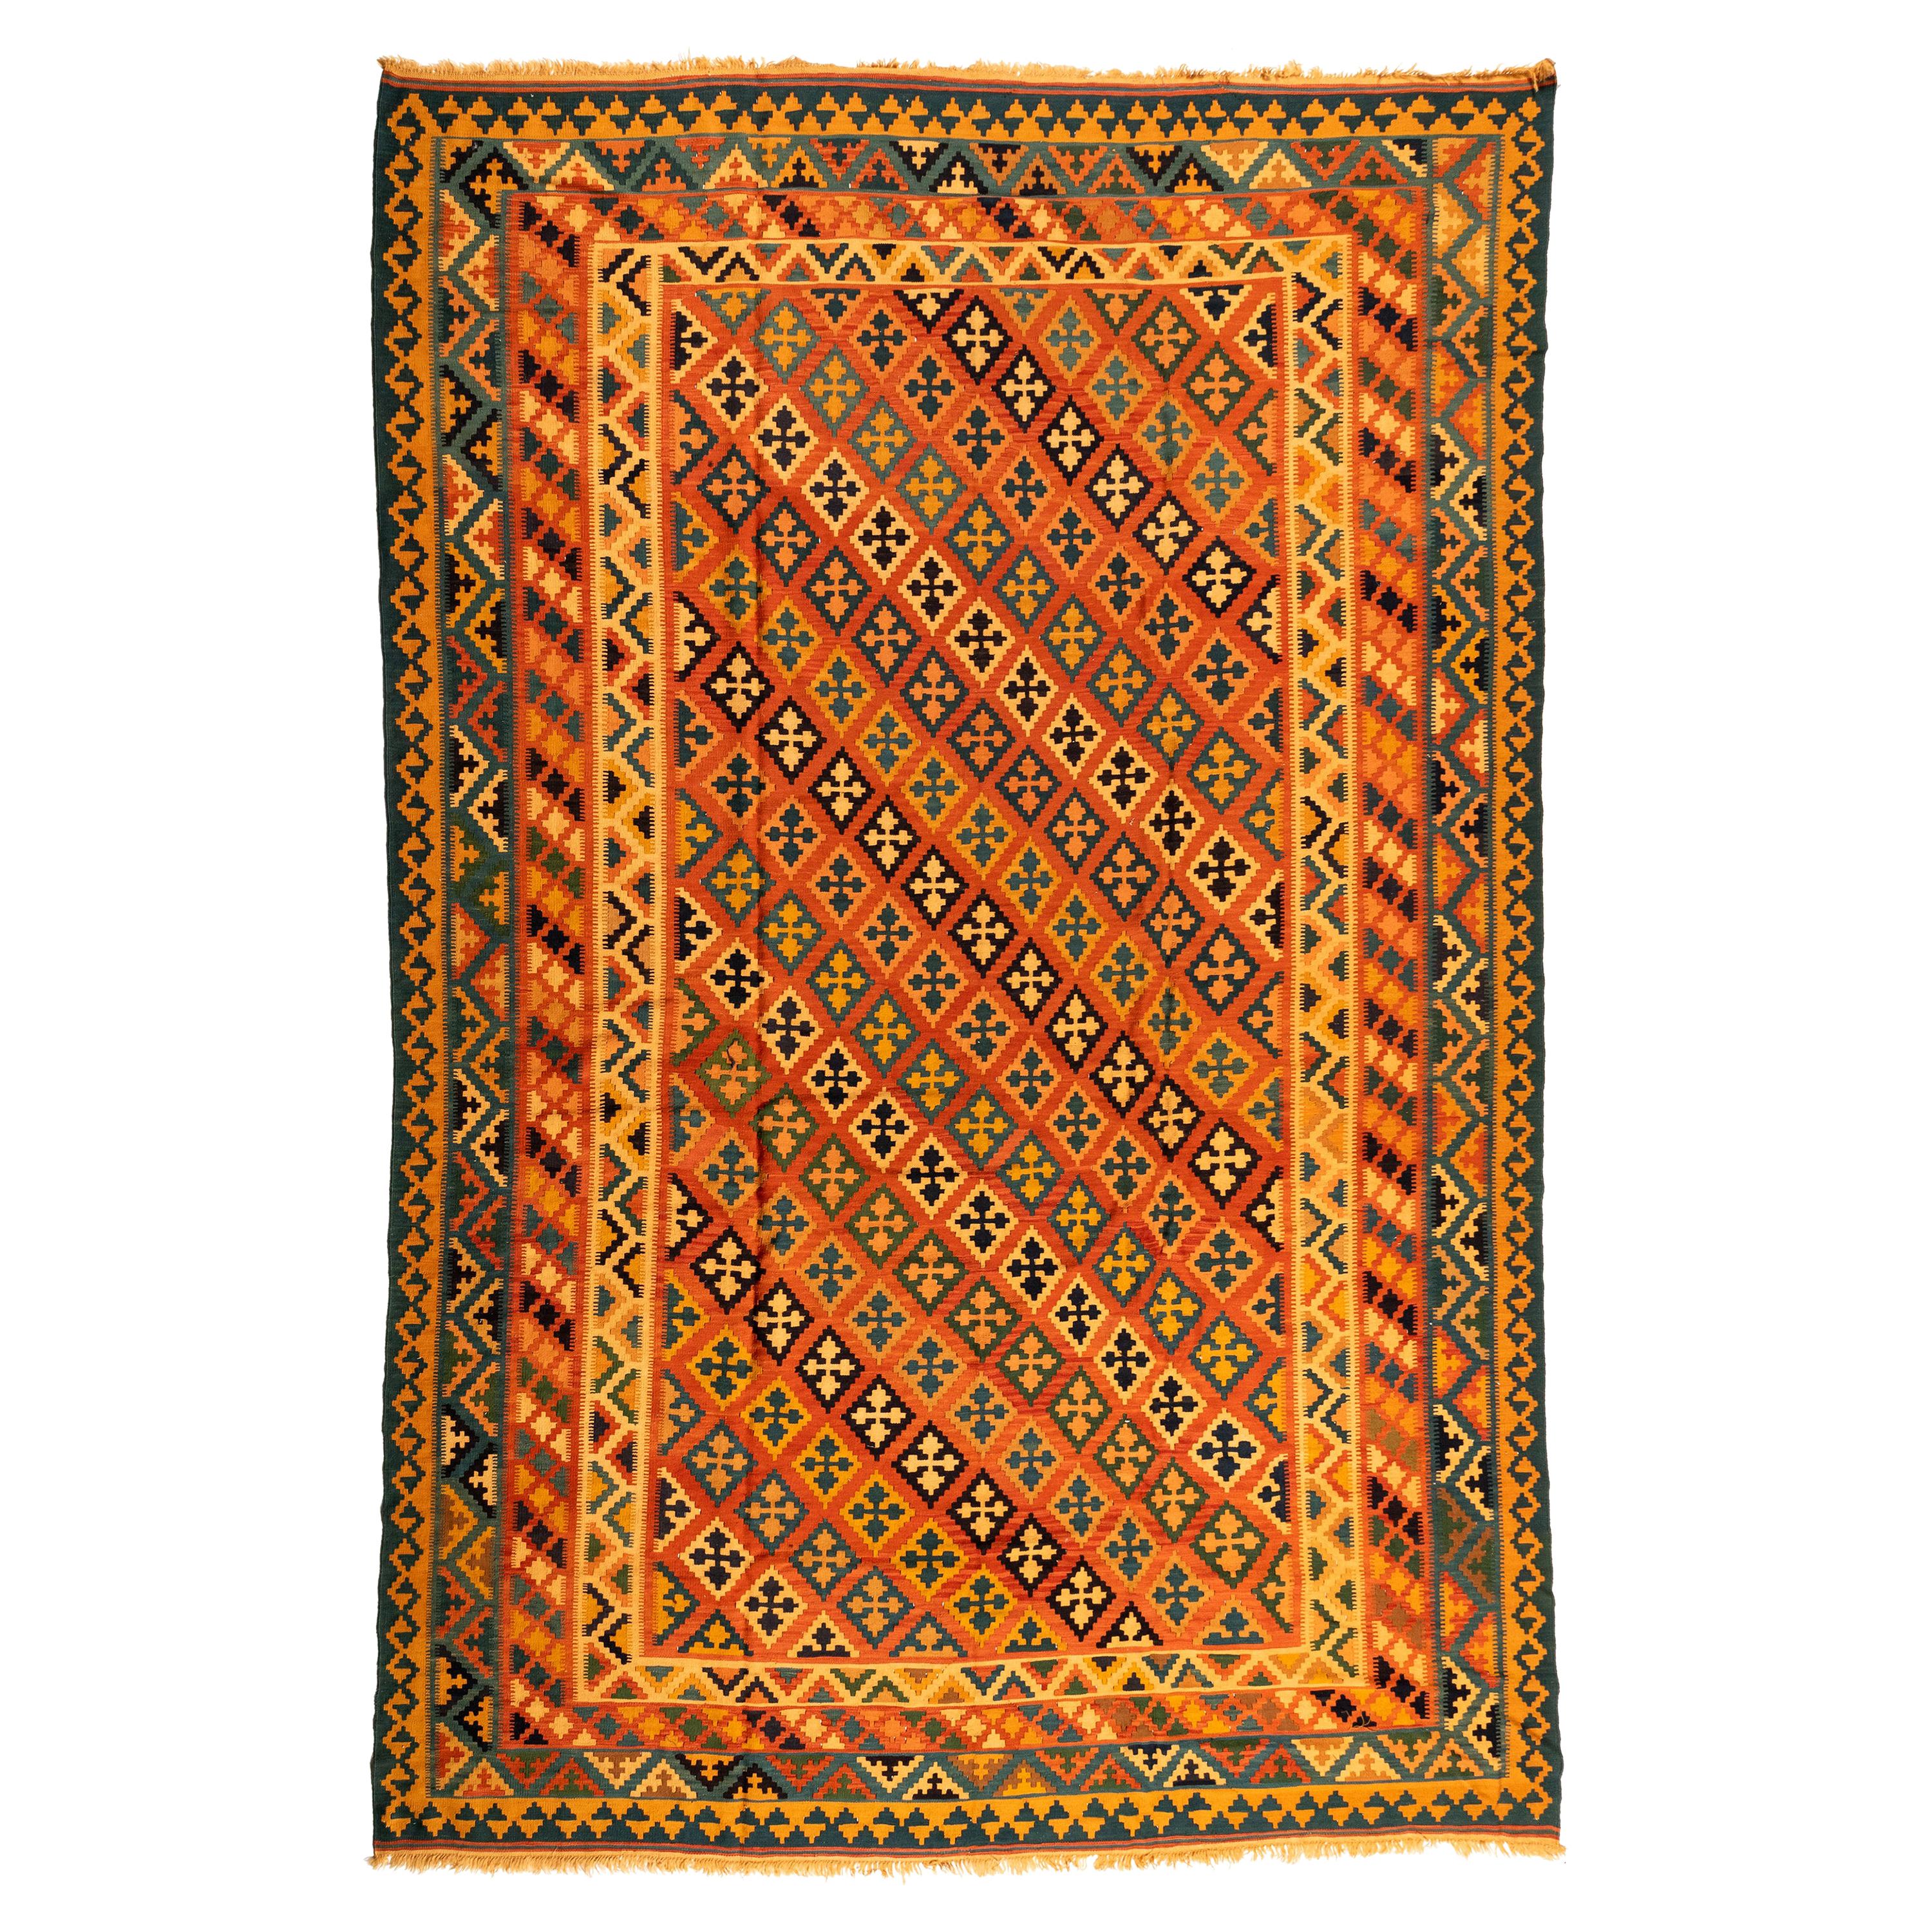 Antique Orange and Yellow Caucasian Kilim Geometric Rug, circa 1940s For Sale